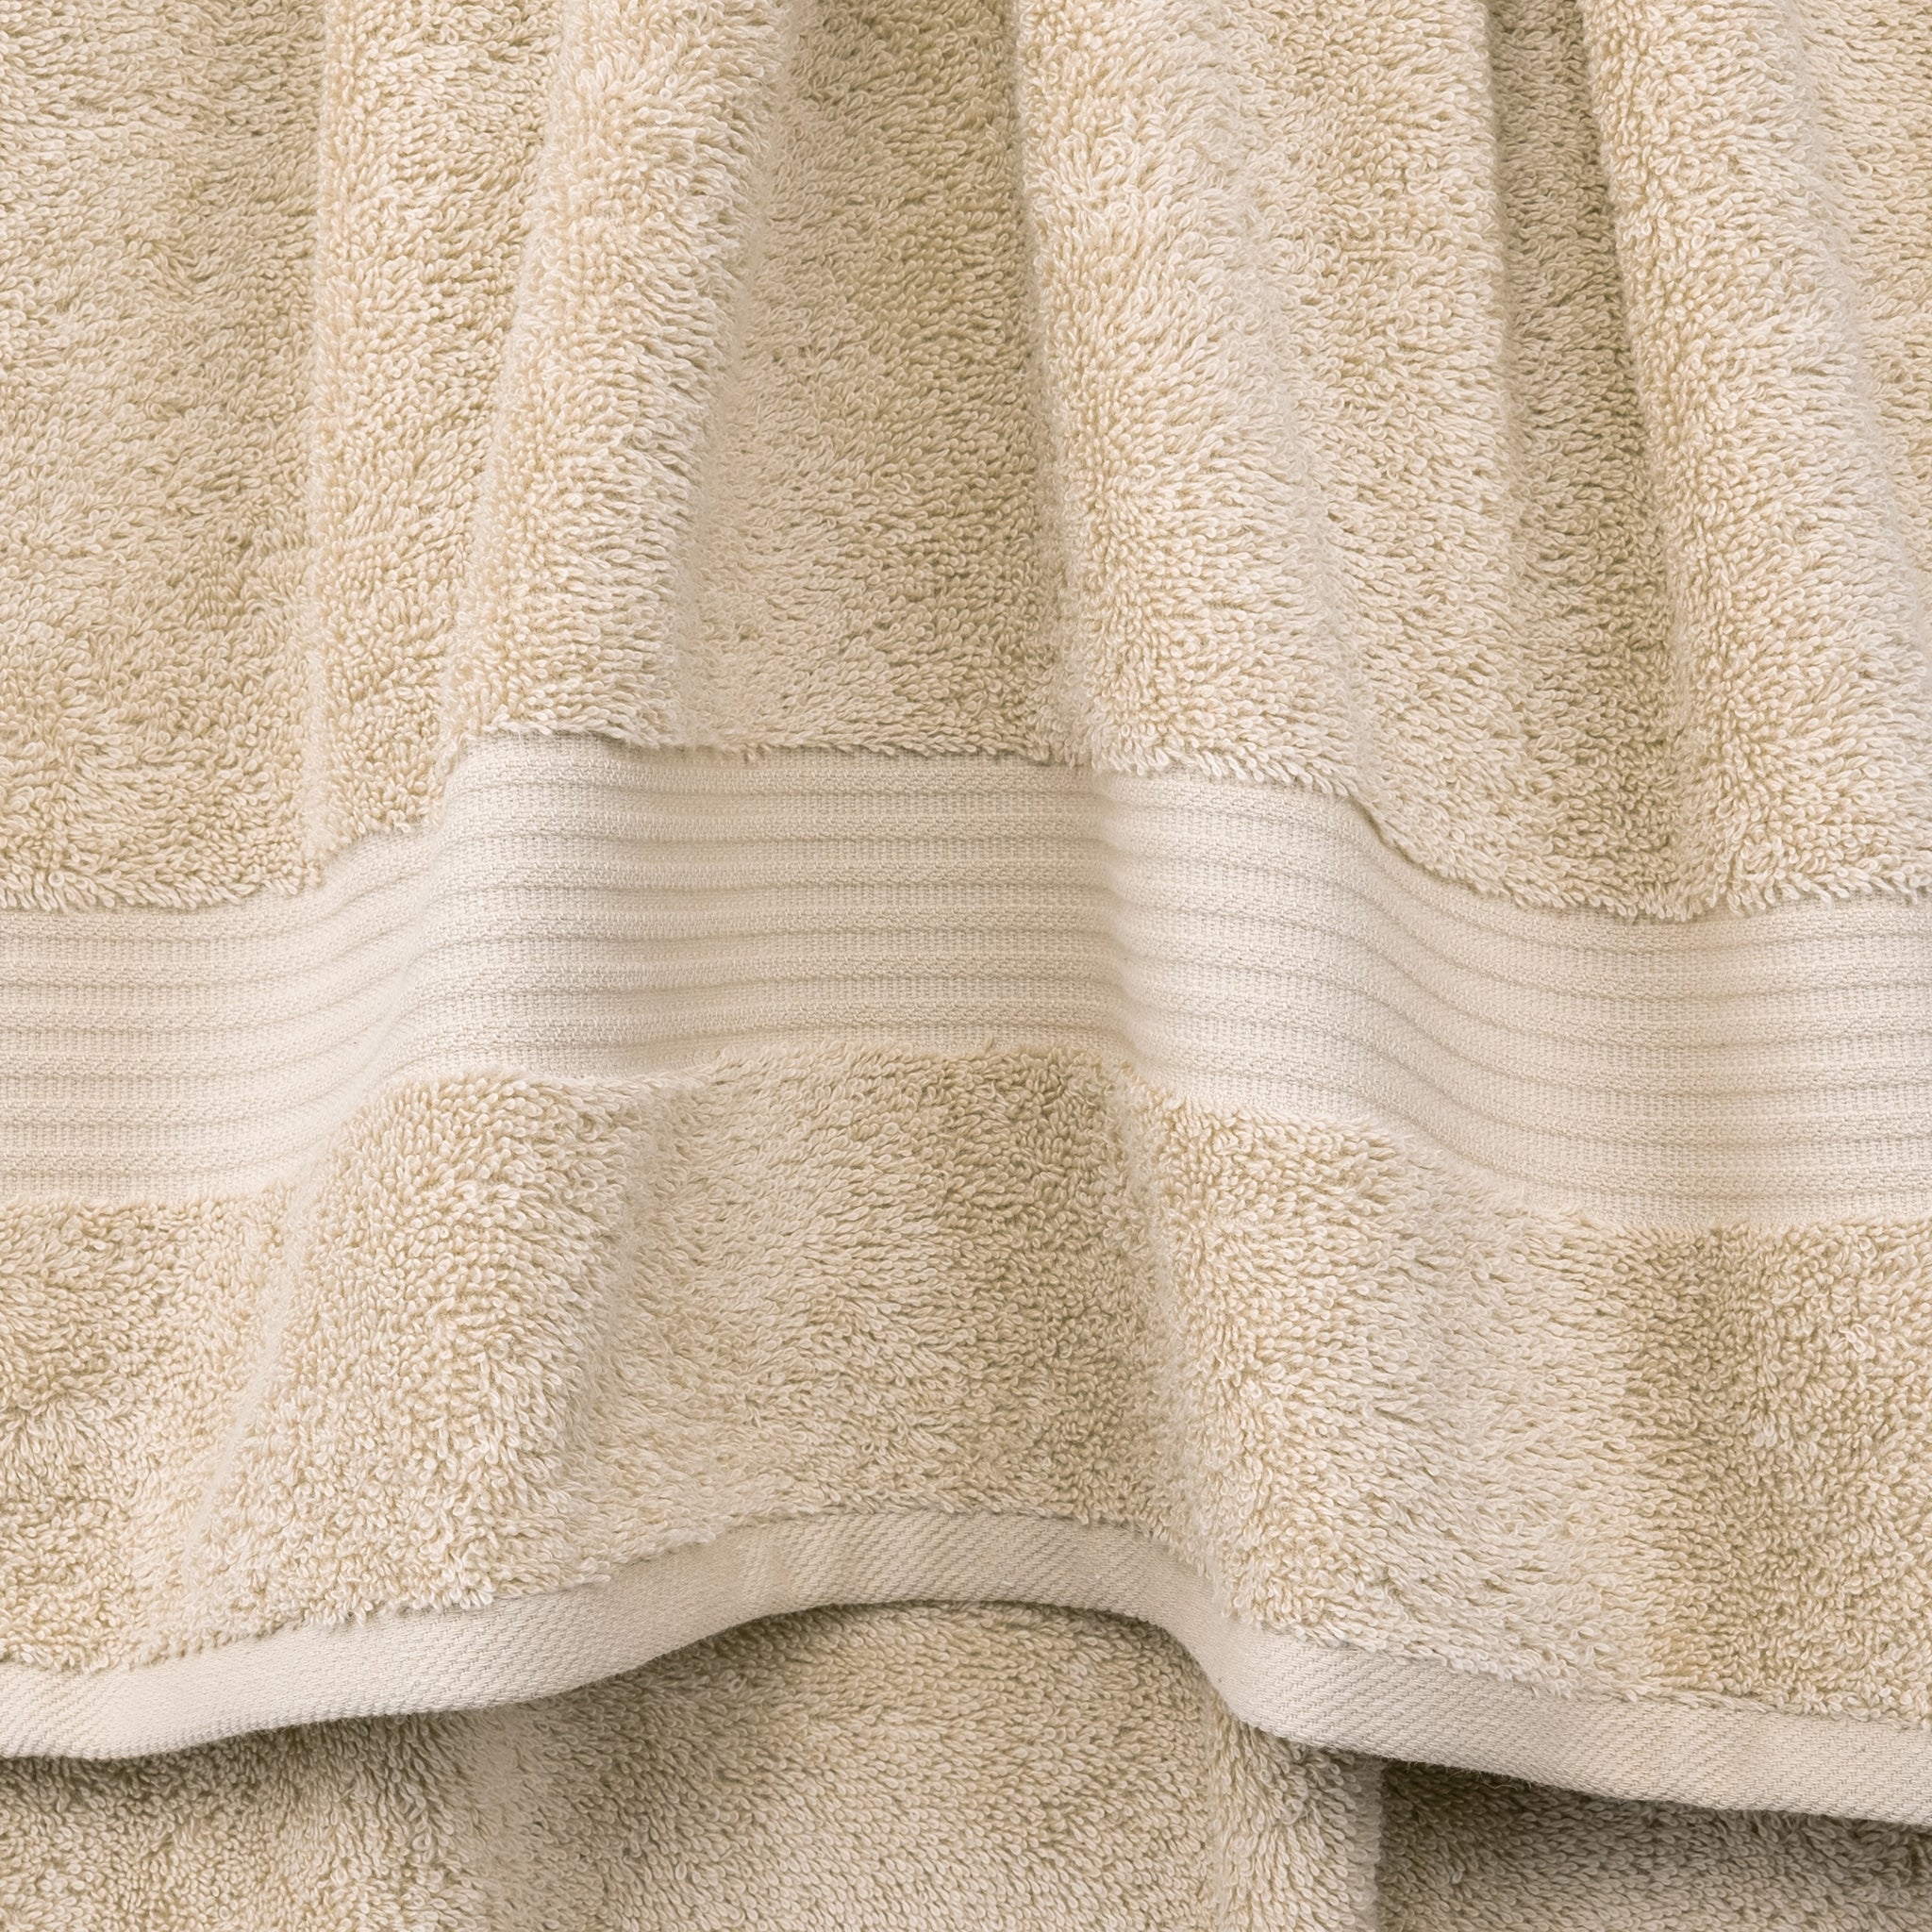 American Soft Linen Bekos 100% Cotton Turkish Towels, 4 Piece Hand Towel Set -sand-taupe-03